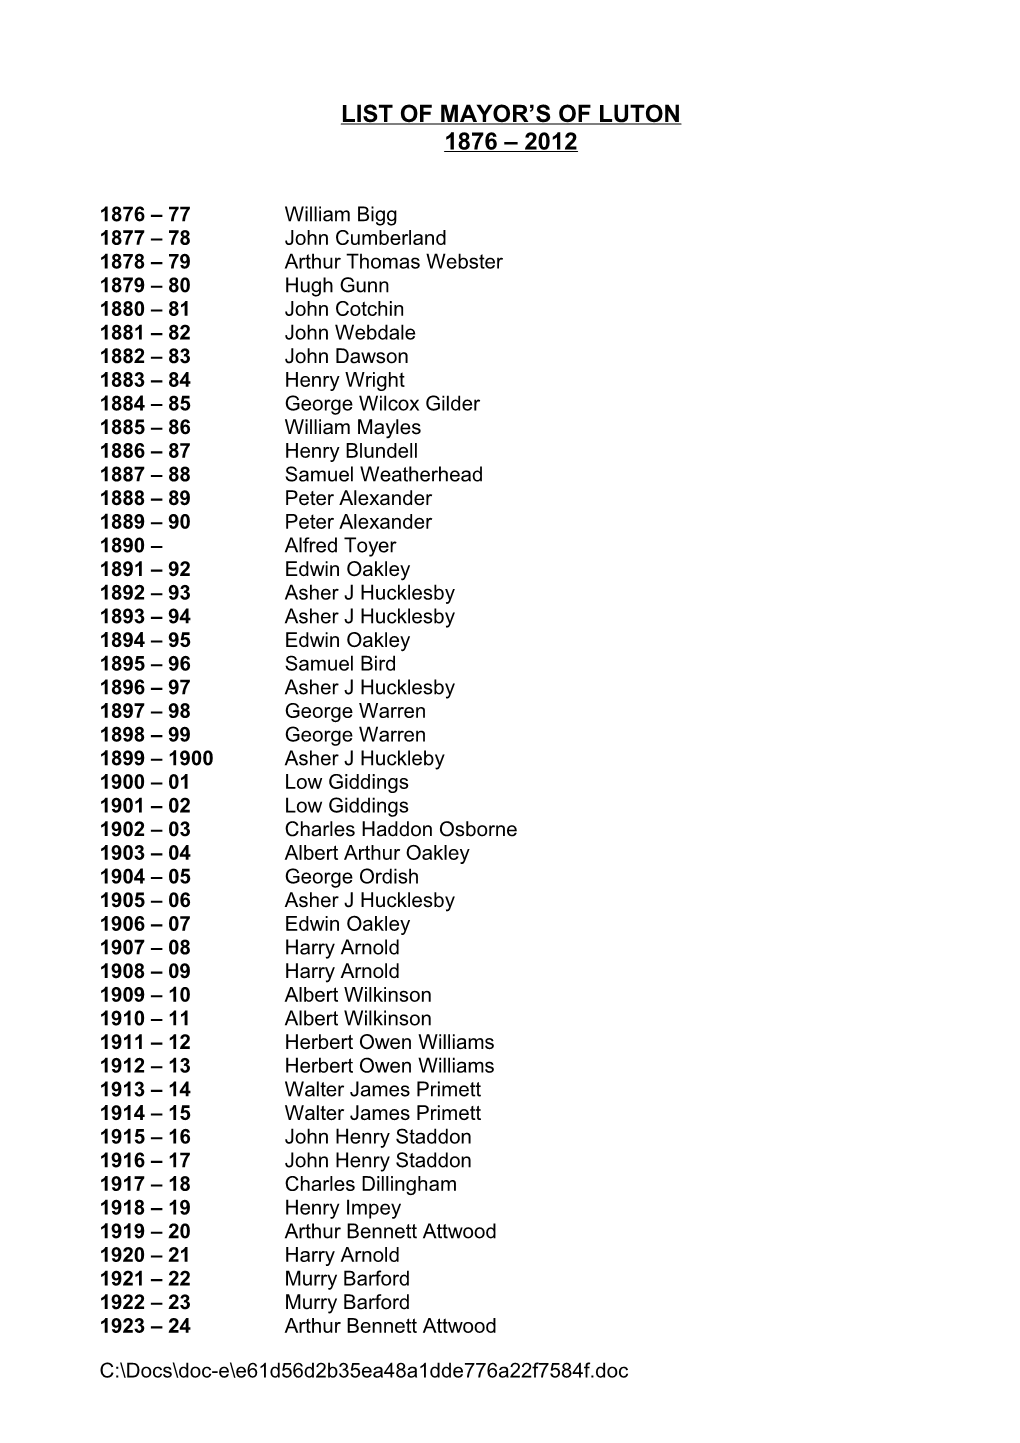 List of Mayors of Luton 1876 - 2016